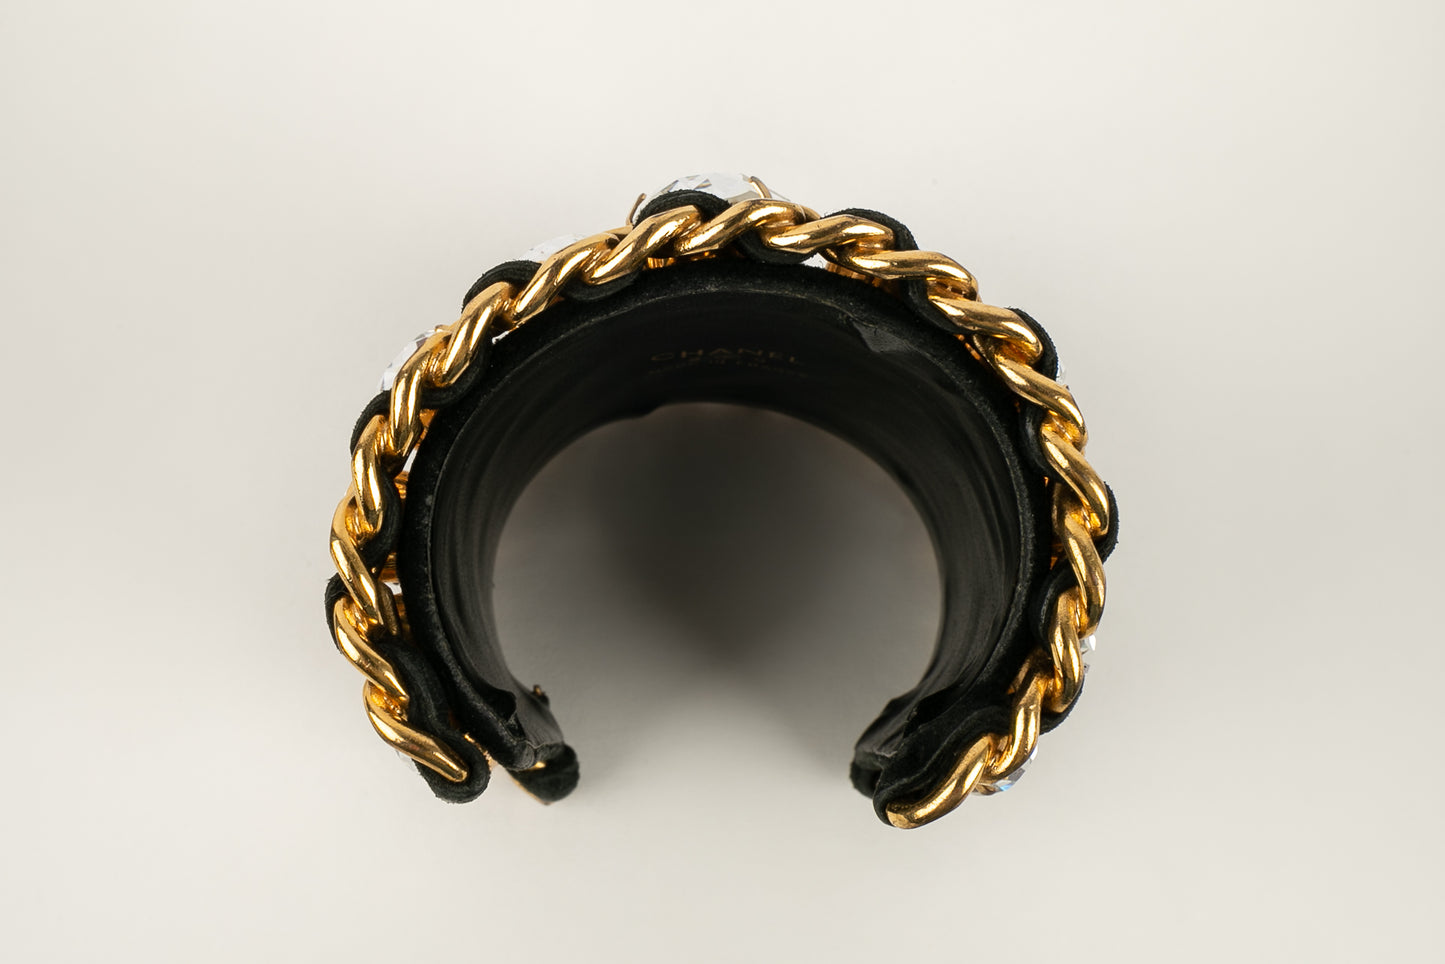 Bracelet manchette Chanel 